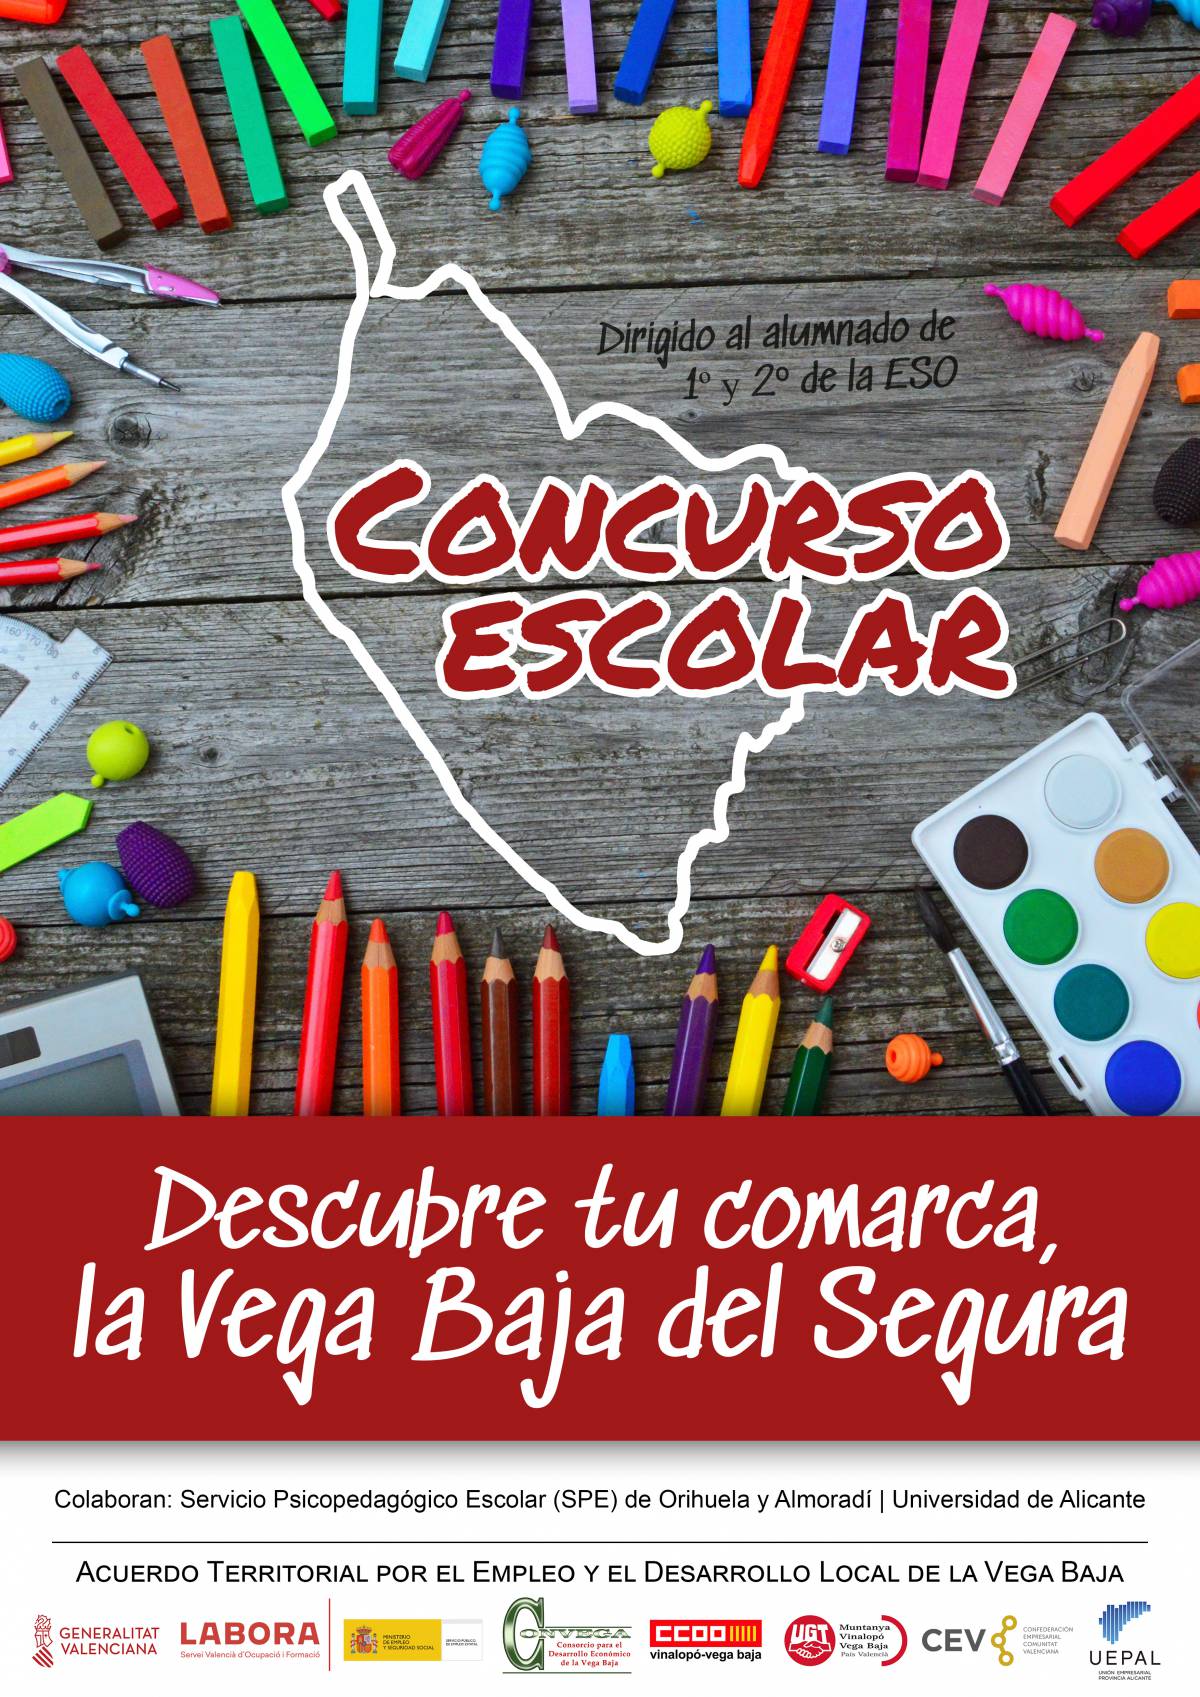 Un concurso escolar que ayuda a descubrir la Vega Baja del Segura